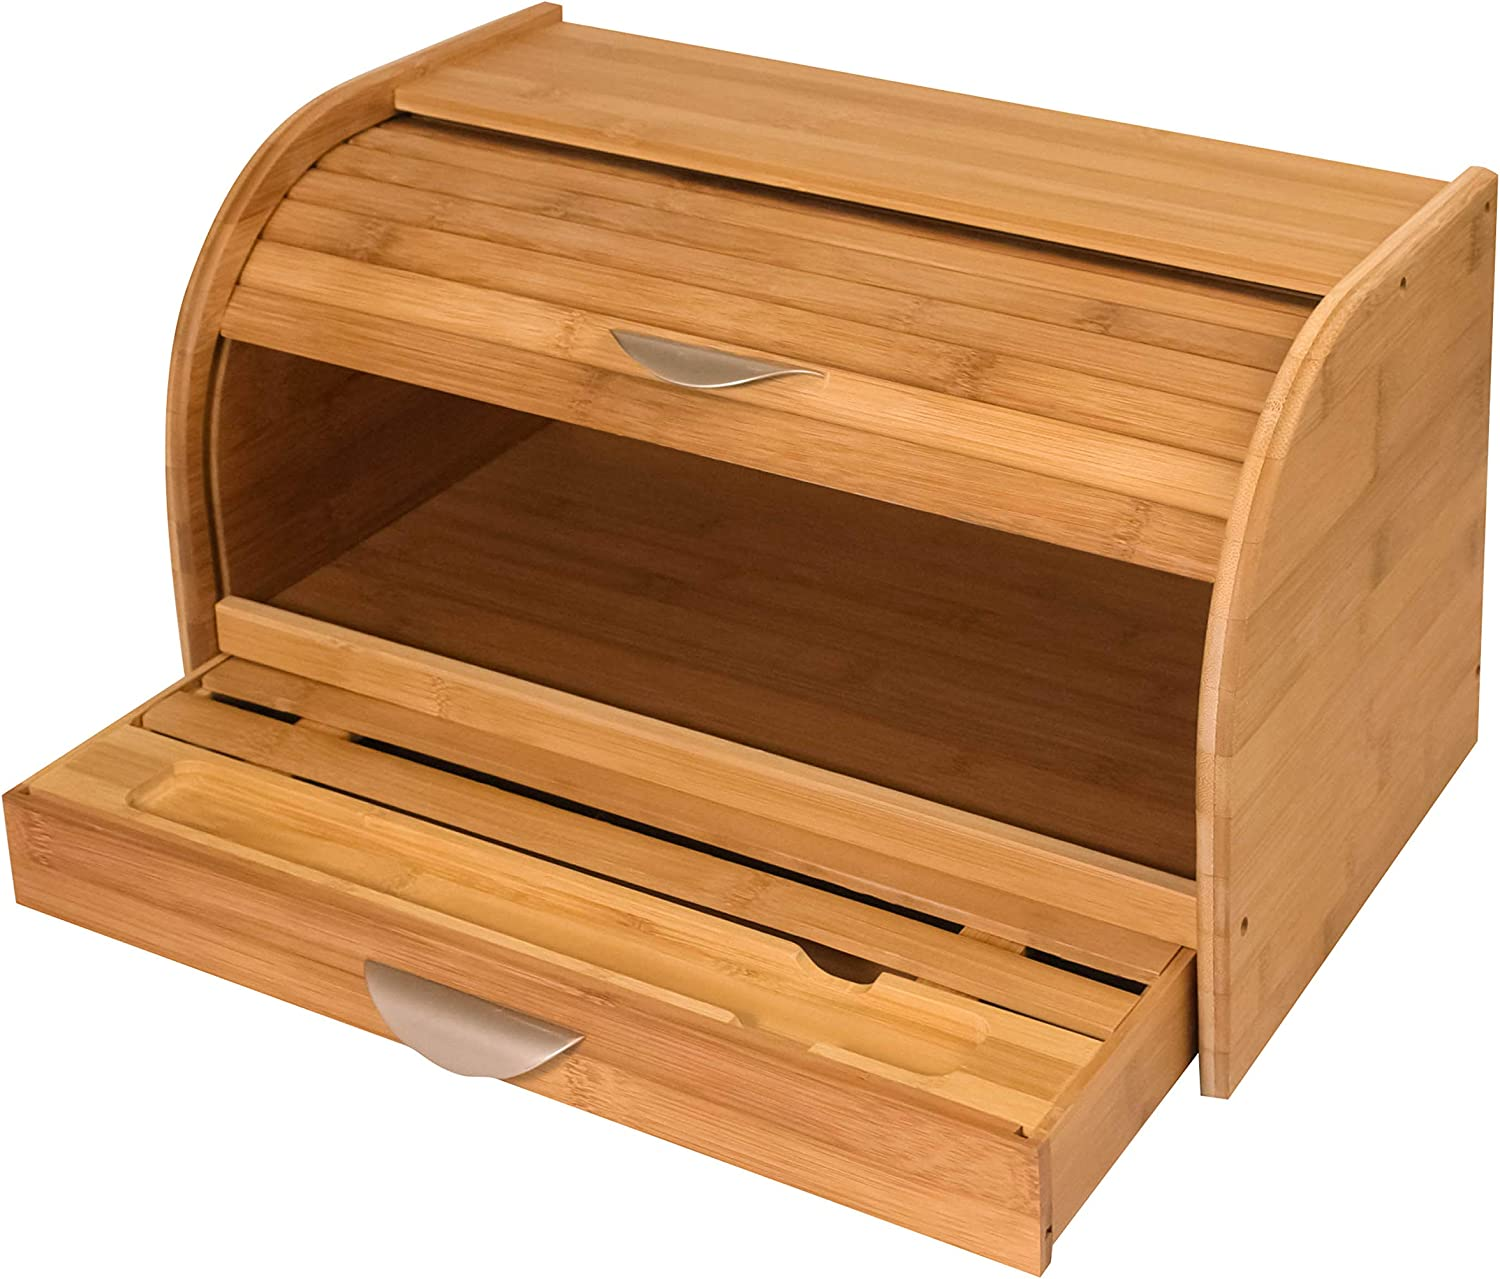 Honey-Can-Do Bamboo Bread Box w/Roll Top (KCH-01081) $27.44